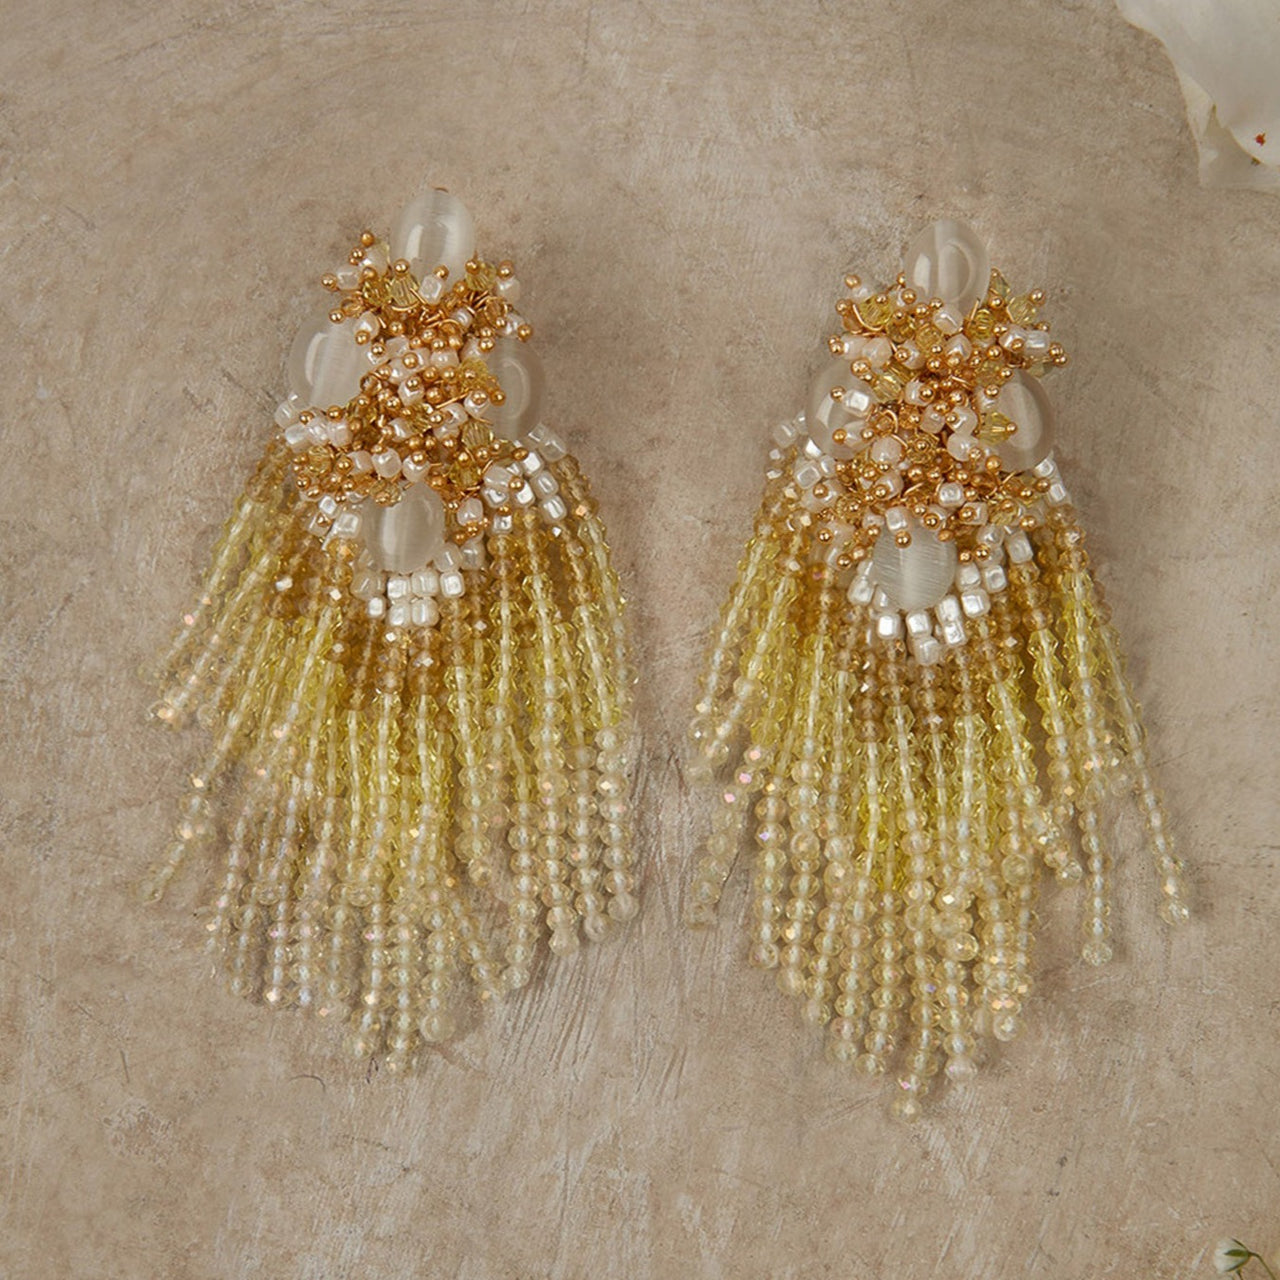 yellow tassel earrings with pearls